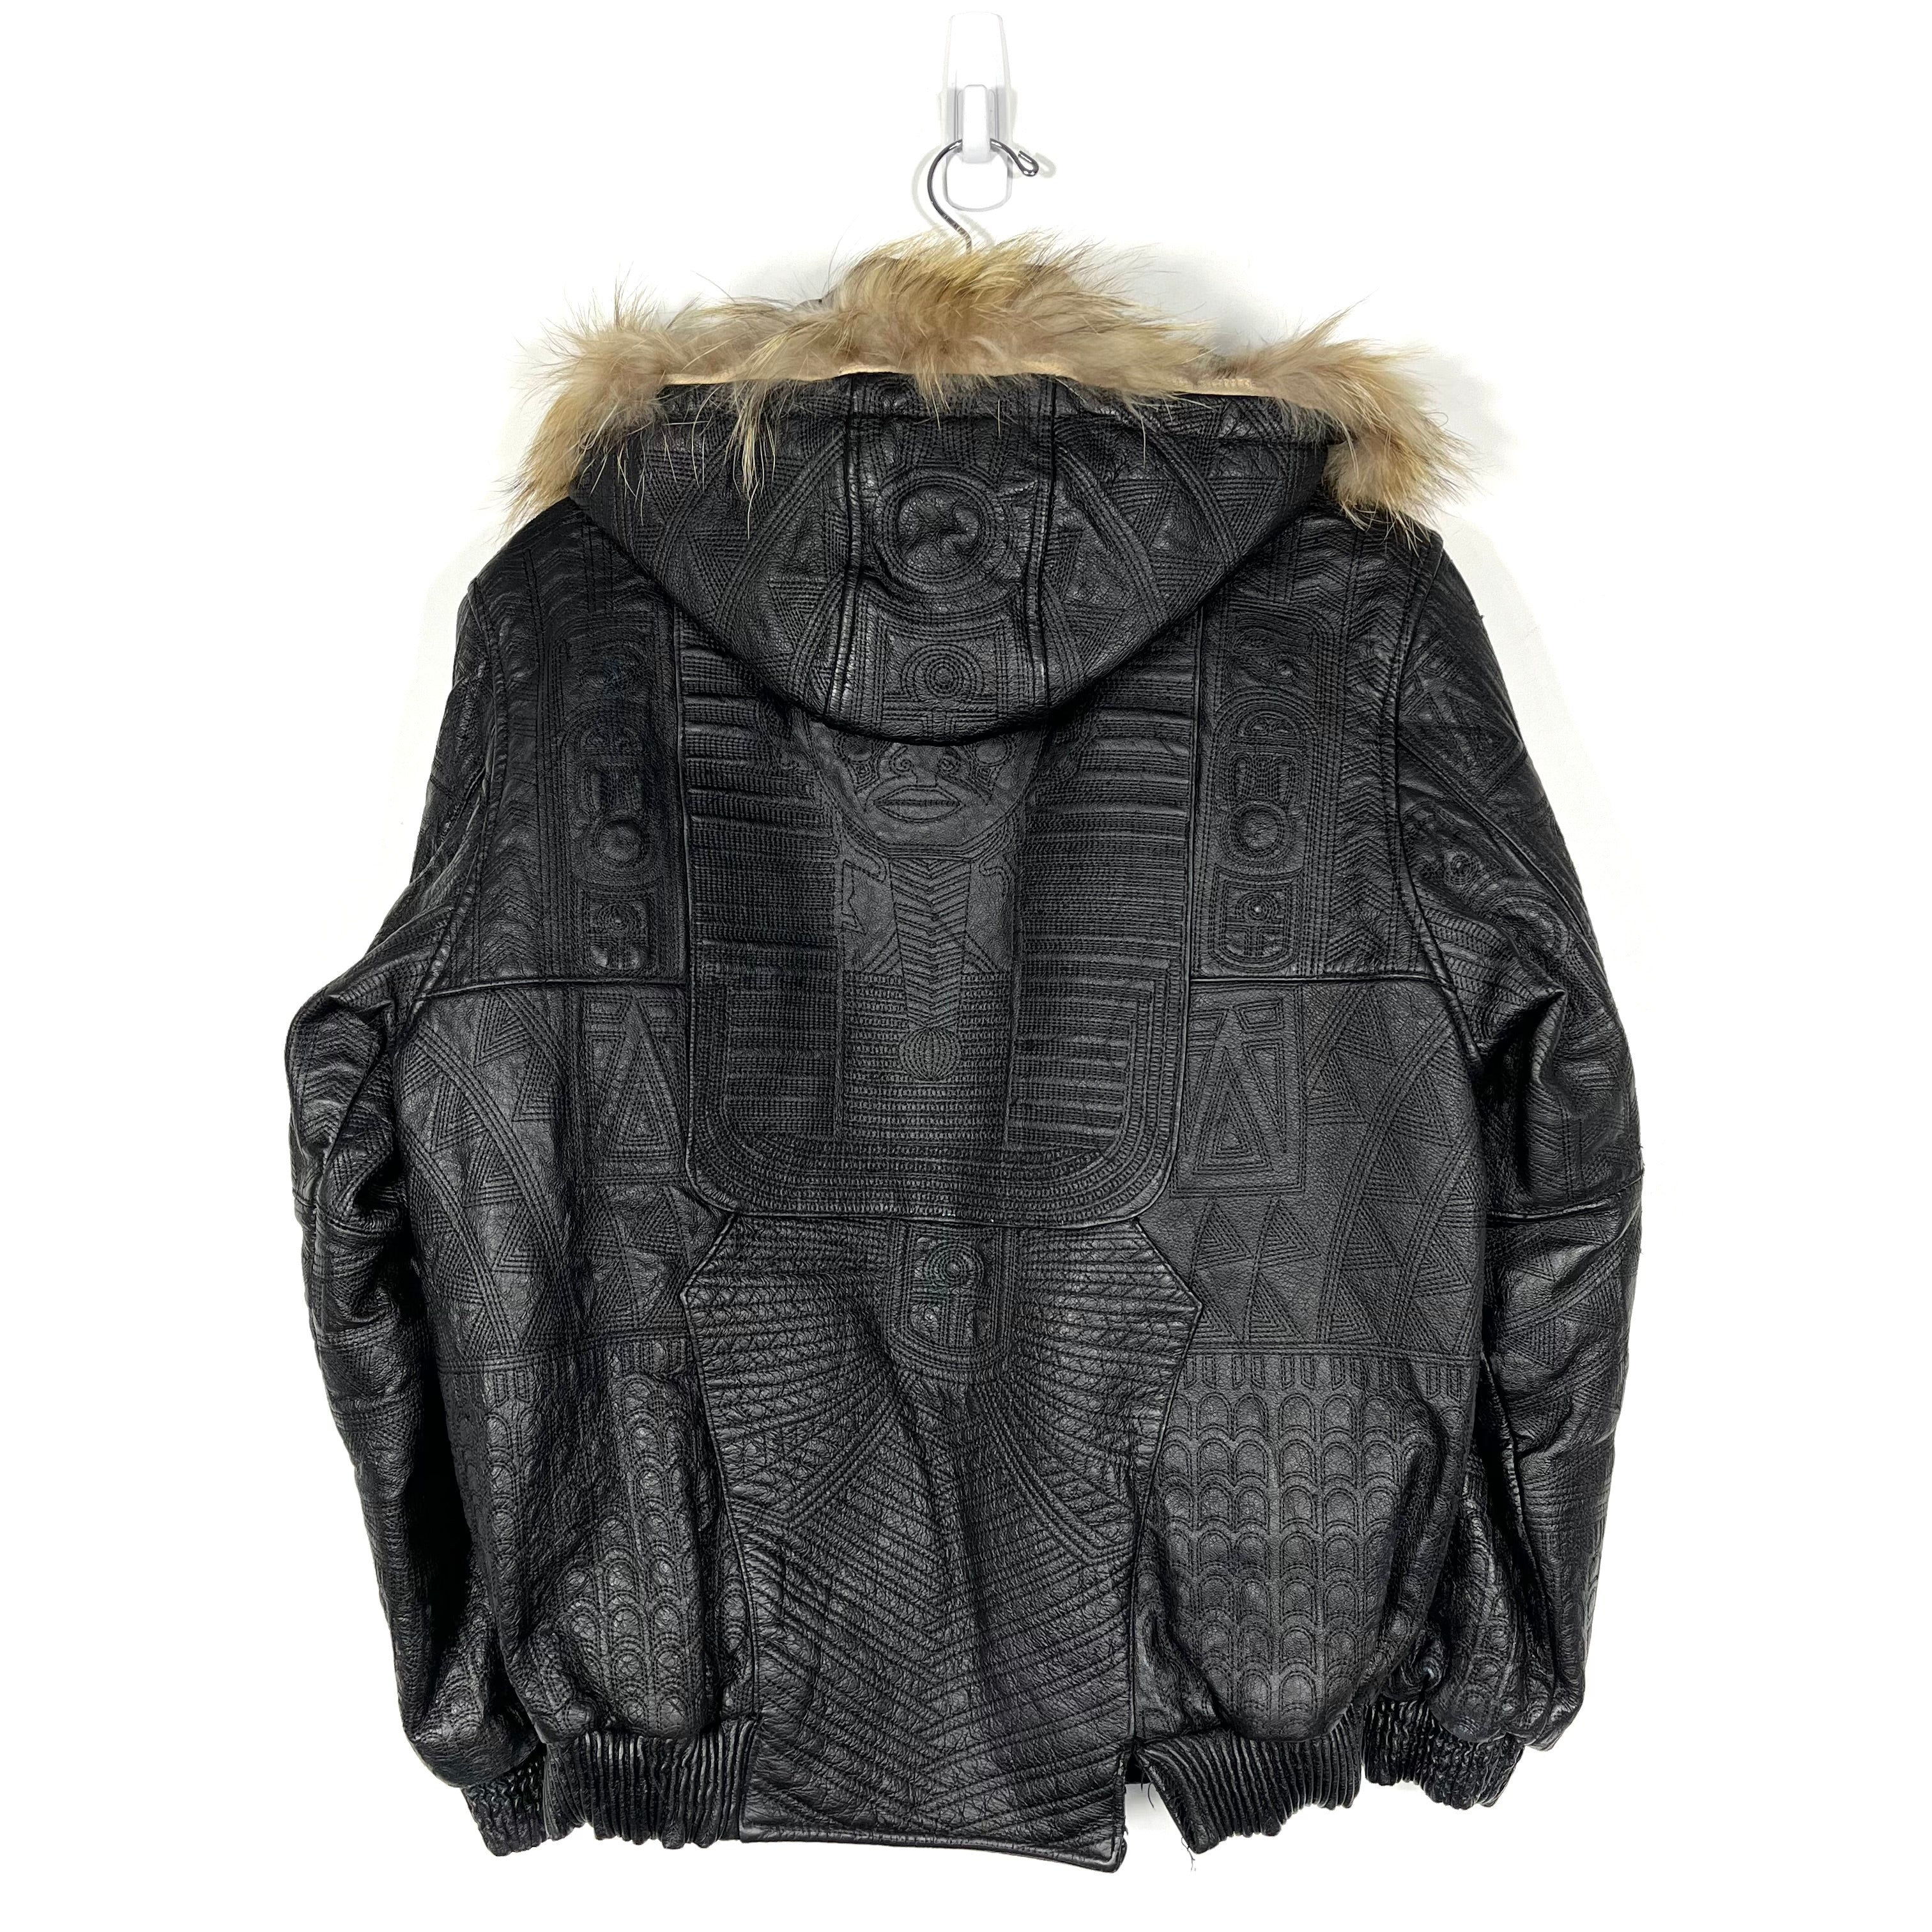 Vintage Desert Well Hooded Leather Jacket - Women's XL